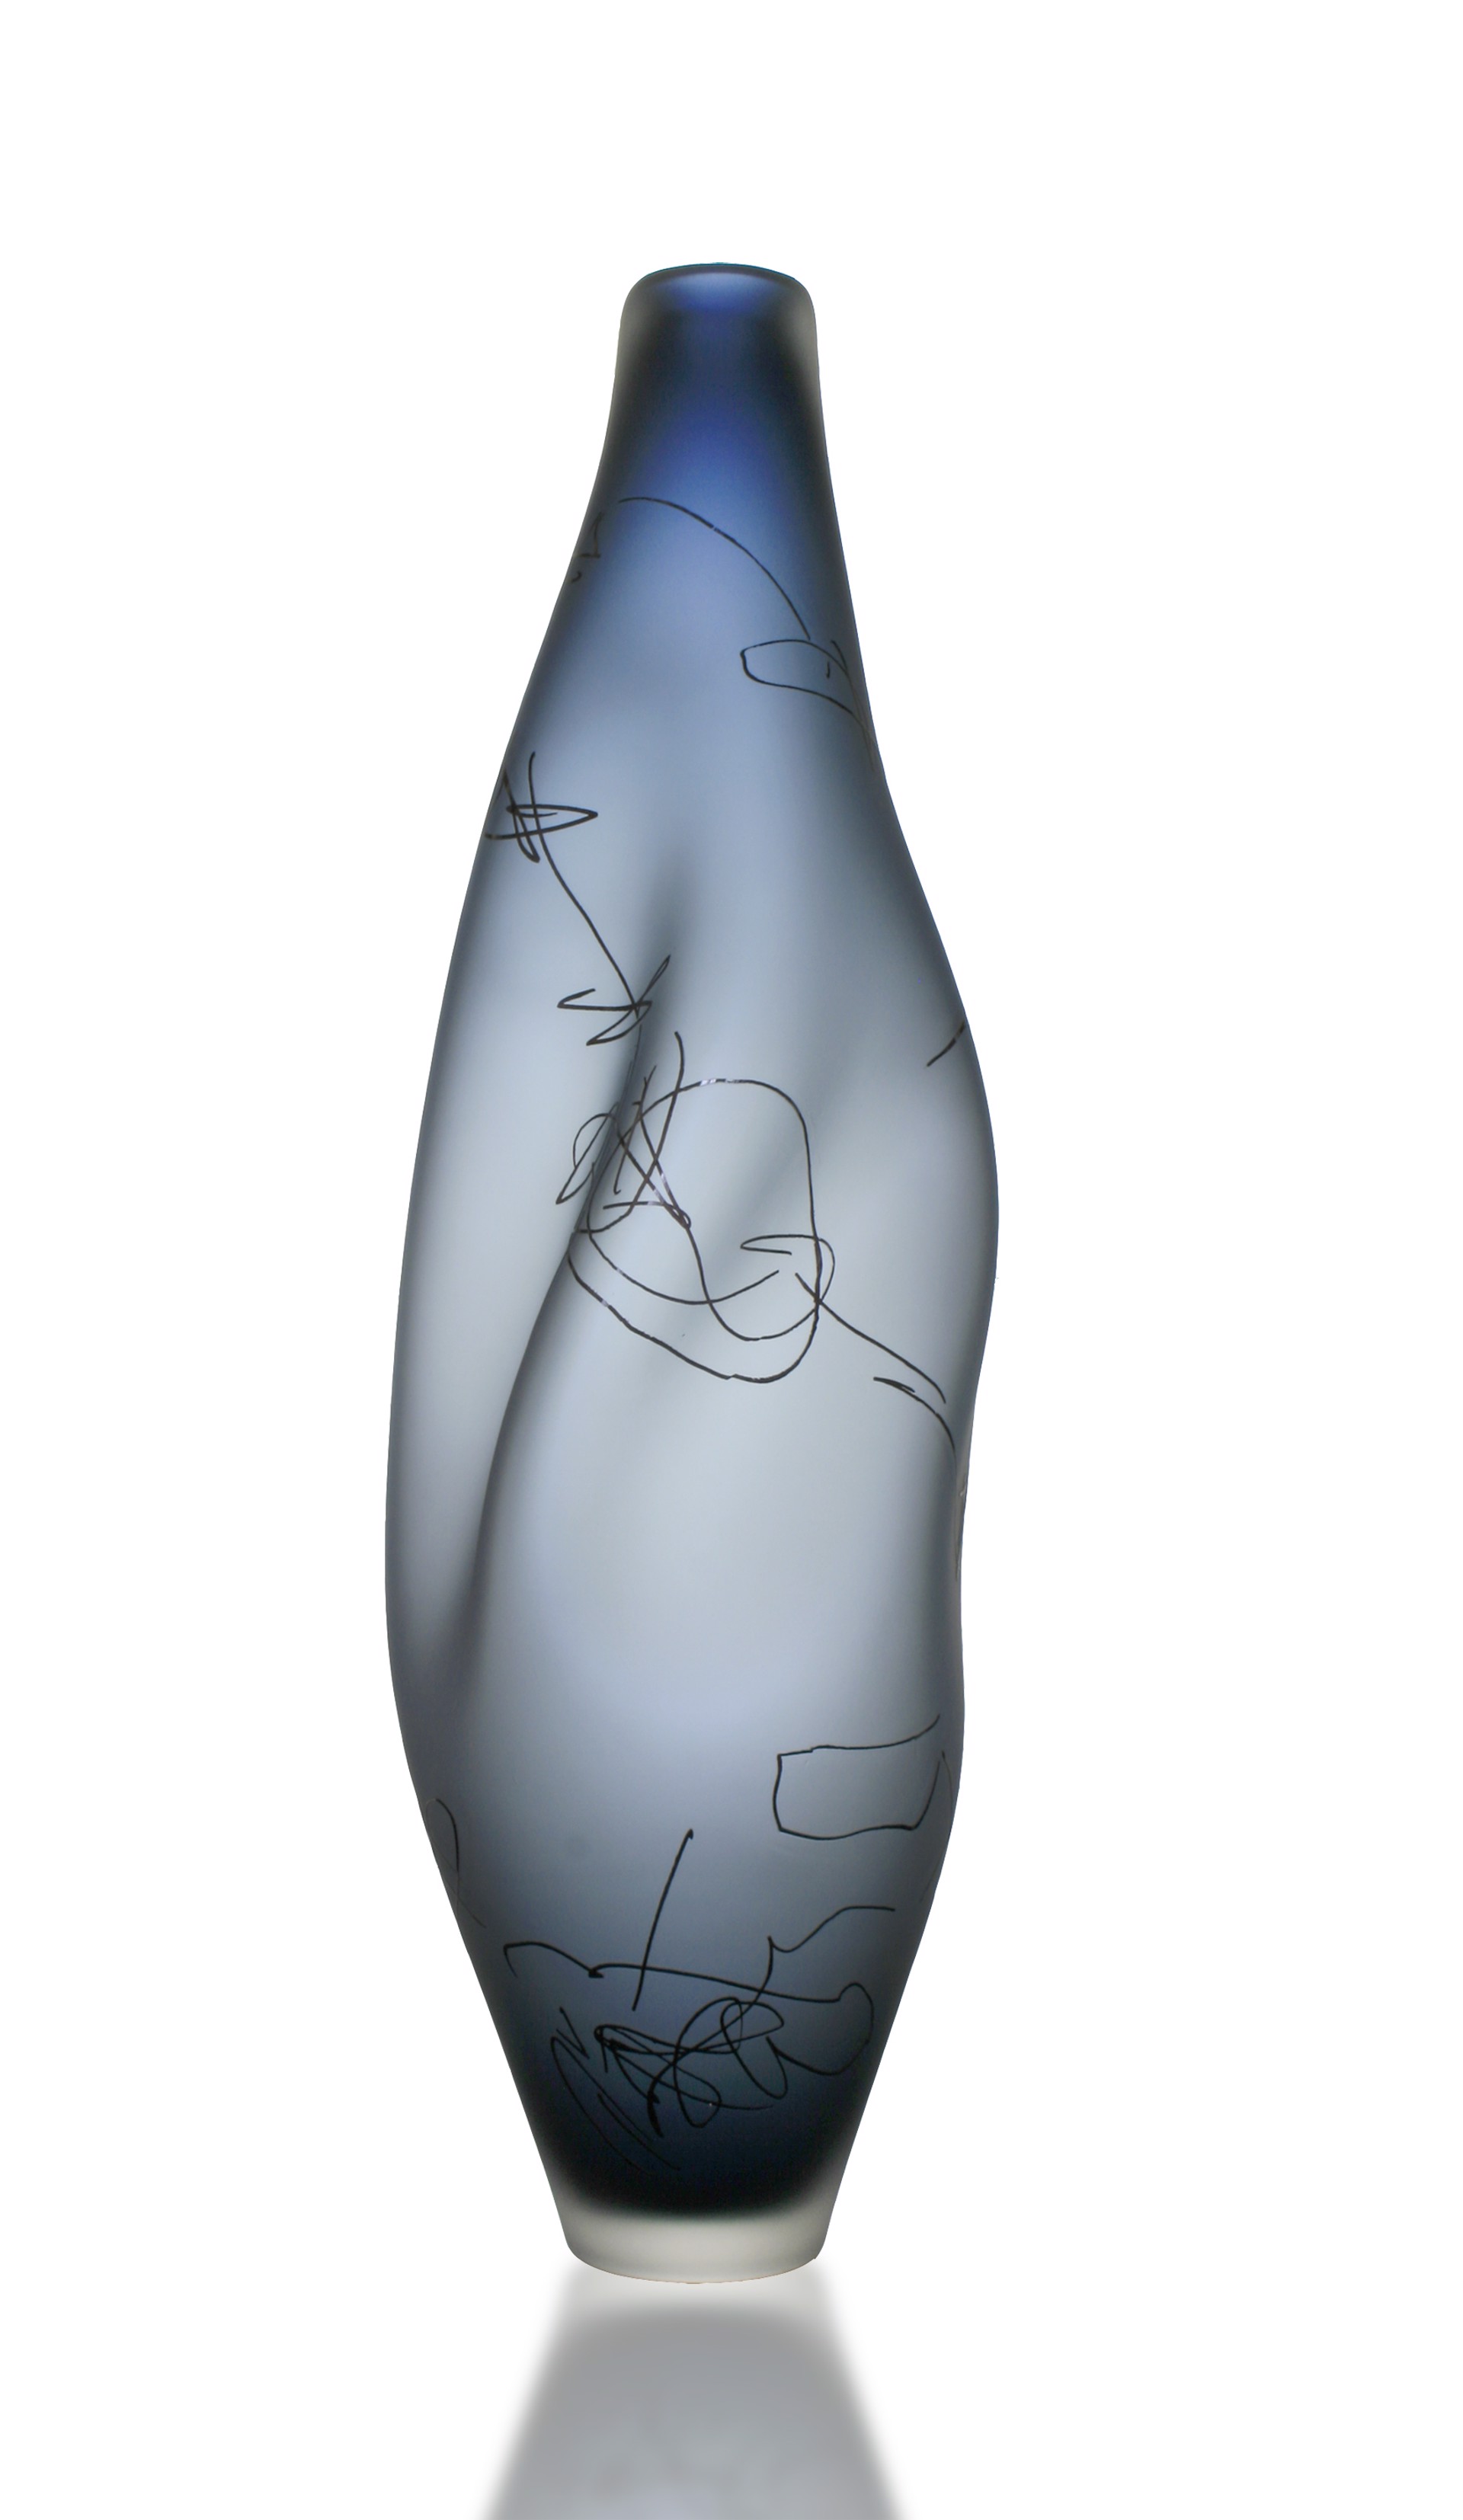 Steel Blue Scribe Vase by Jeff Goodman Studio